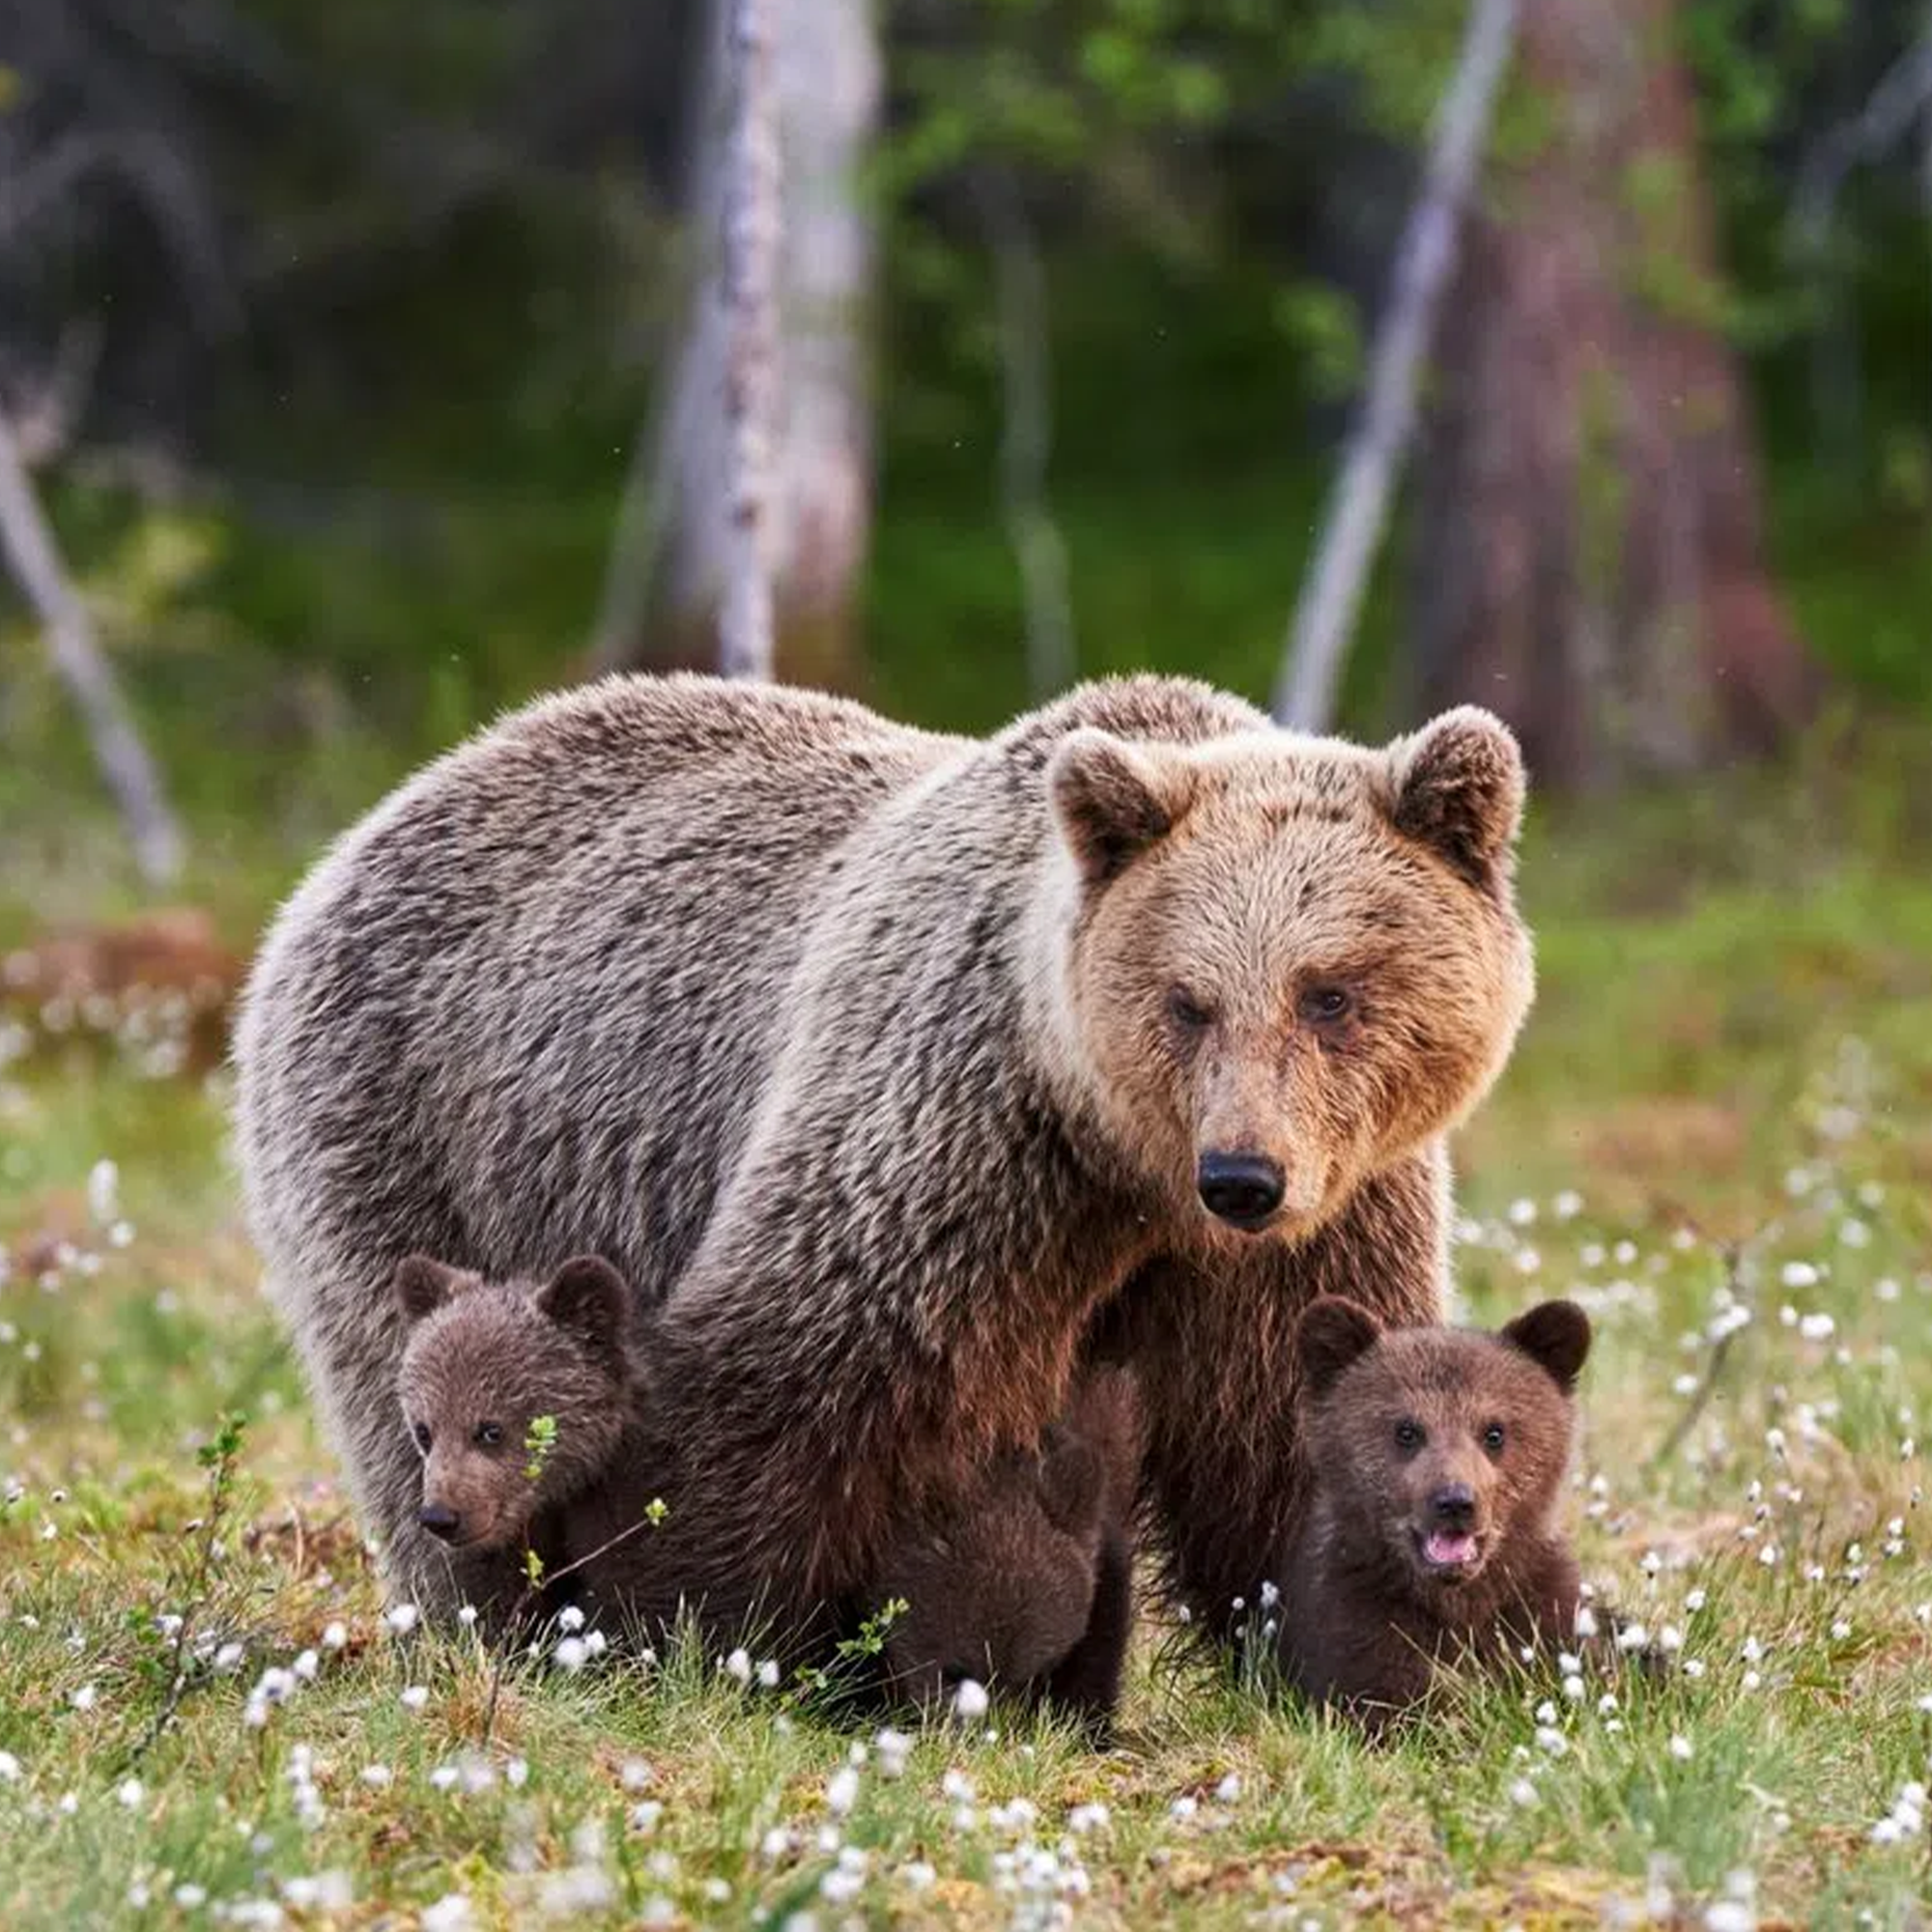 Grizzly Bear Adoption Kit